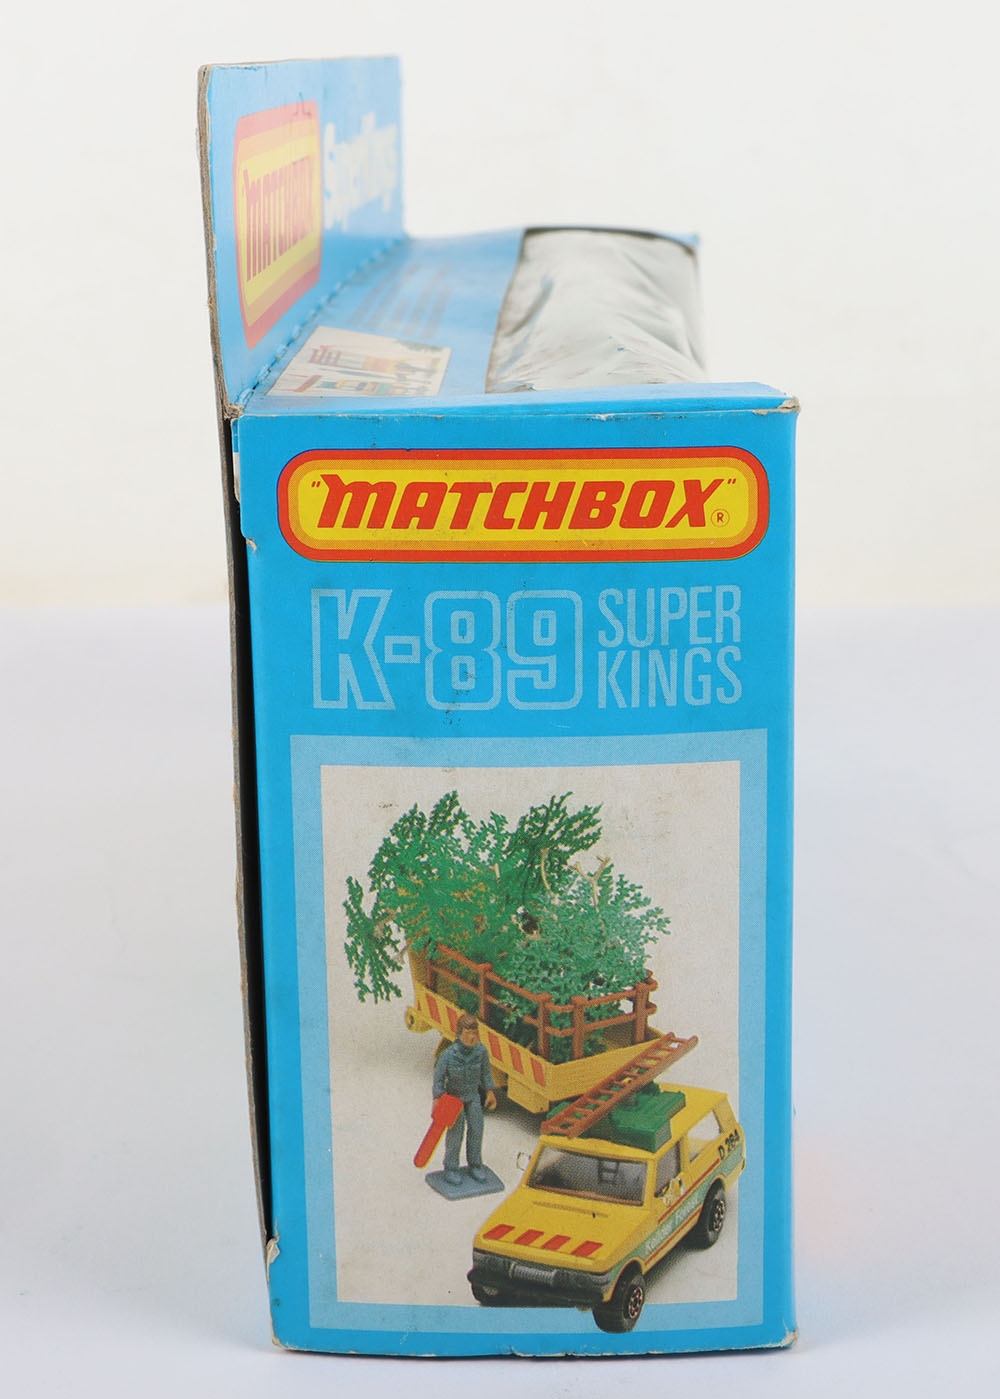 Matchbox Superkings K-89 Forestry Set - Image 2 of 6